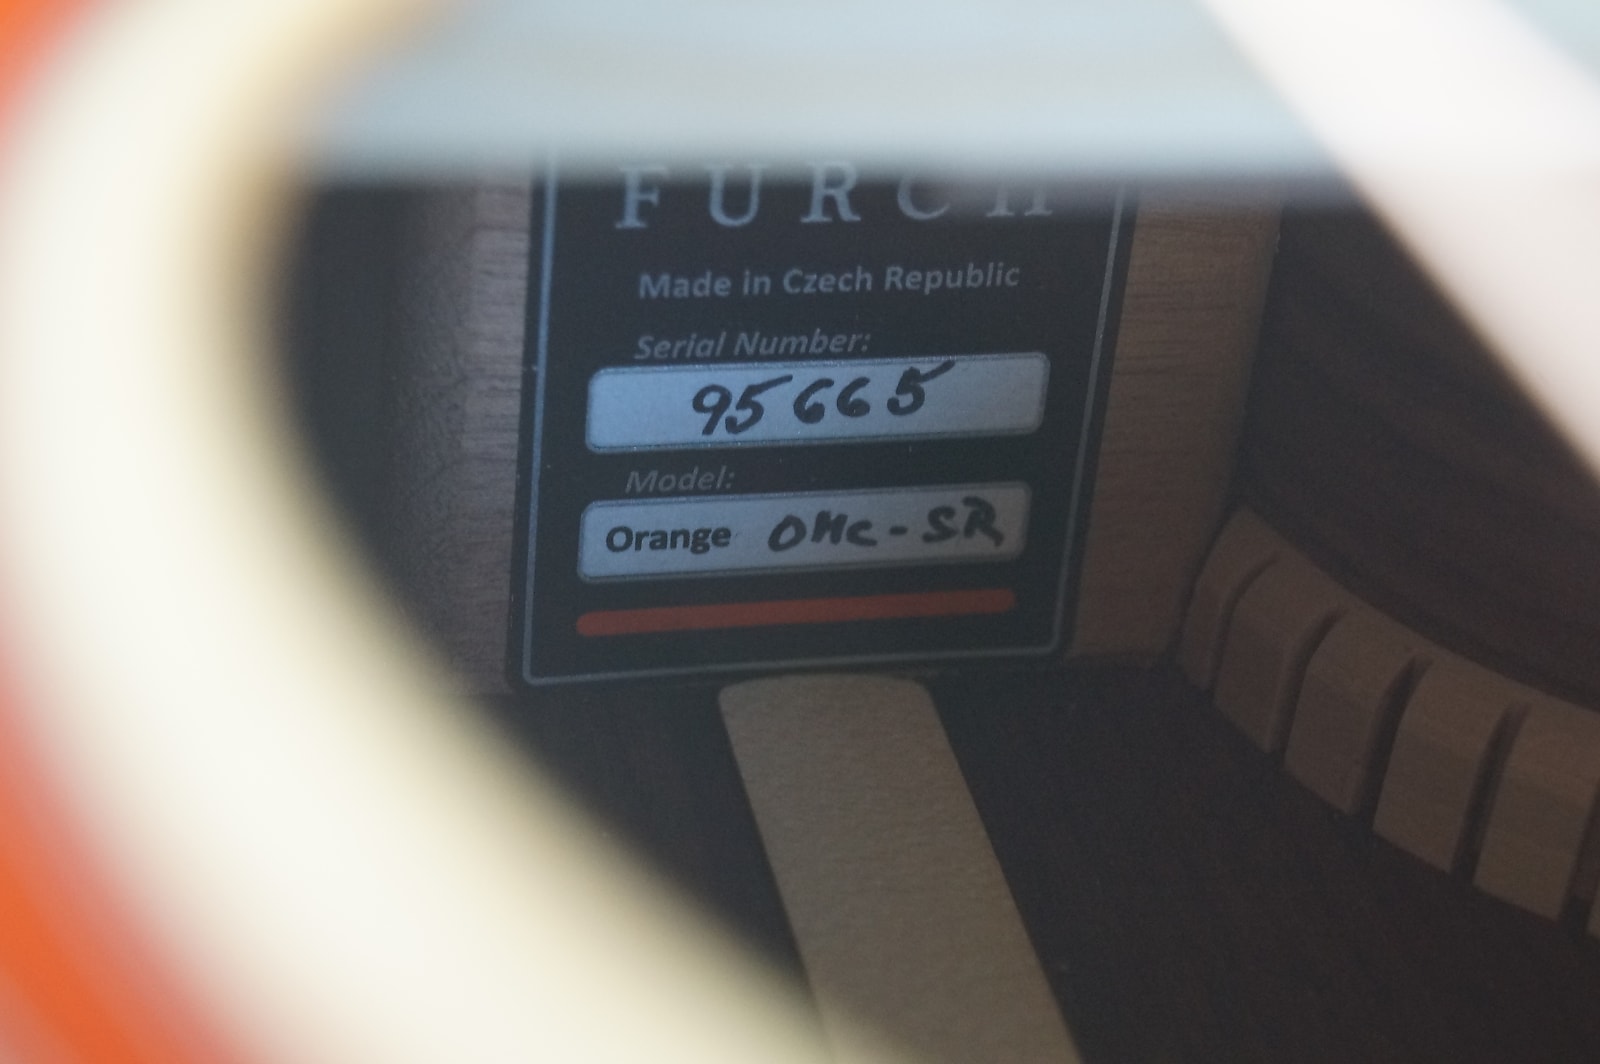 Furch Orange Series OMc-SR Cutaway Sitka Spruce / Indian Rosewood Short Scale - Photo 22